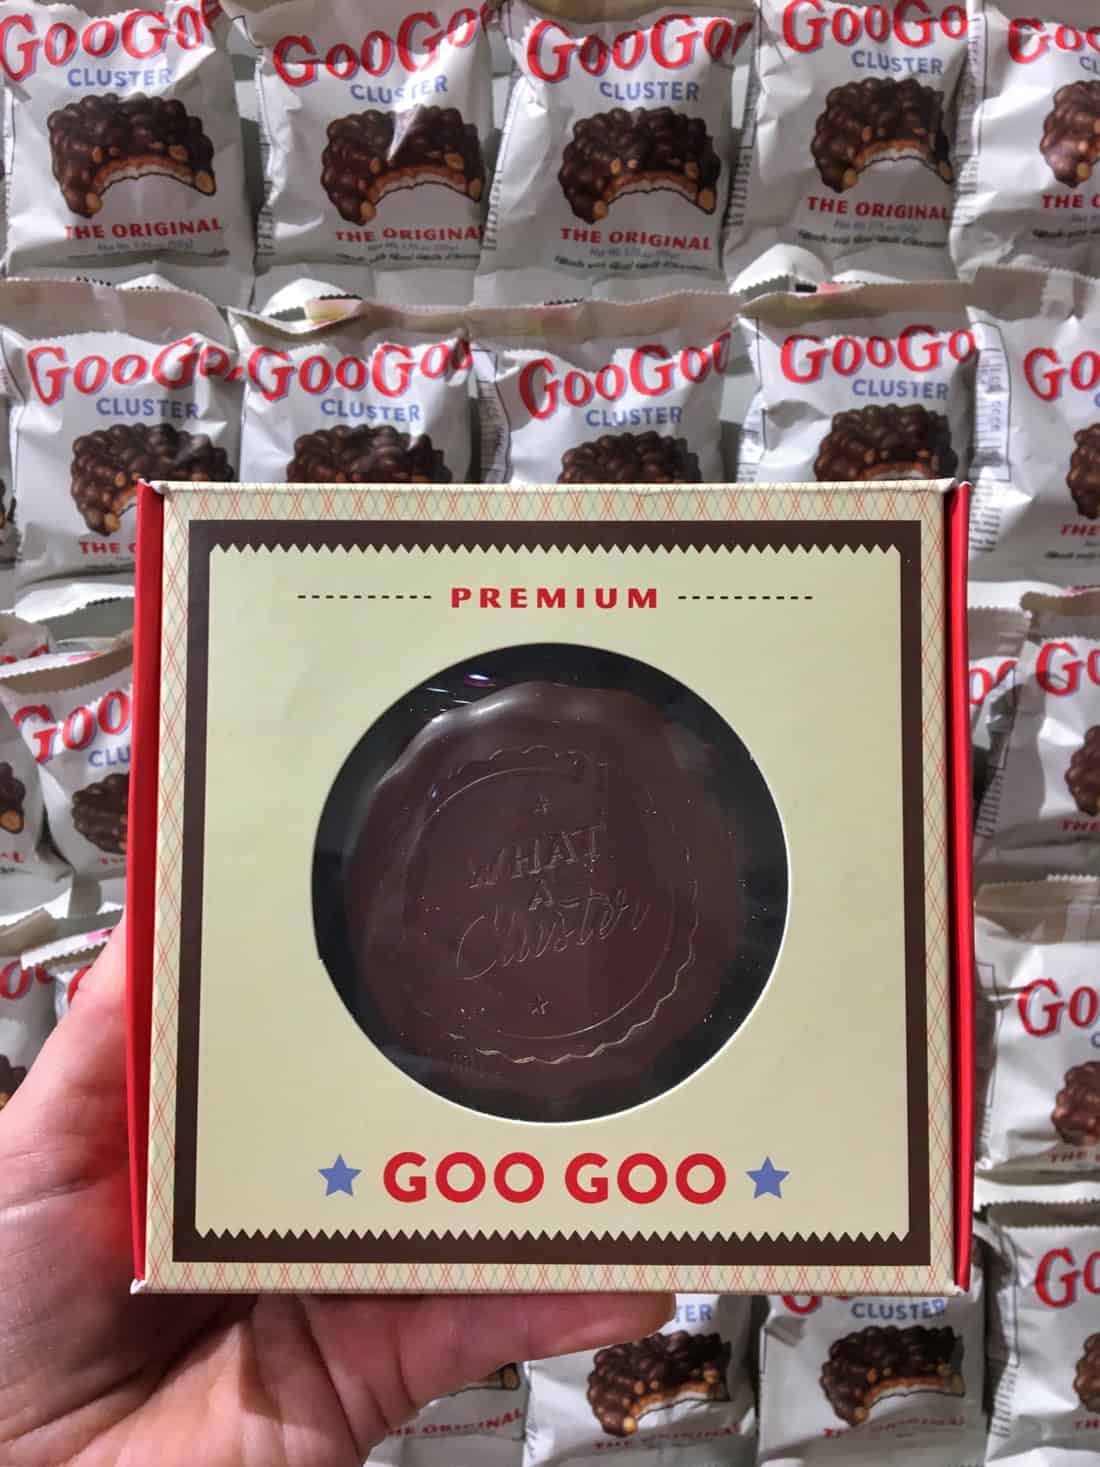 Make Your Own Goo Goo at the Goo Goo Cluster Chocolate Class - Tattling  Tourist